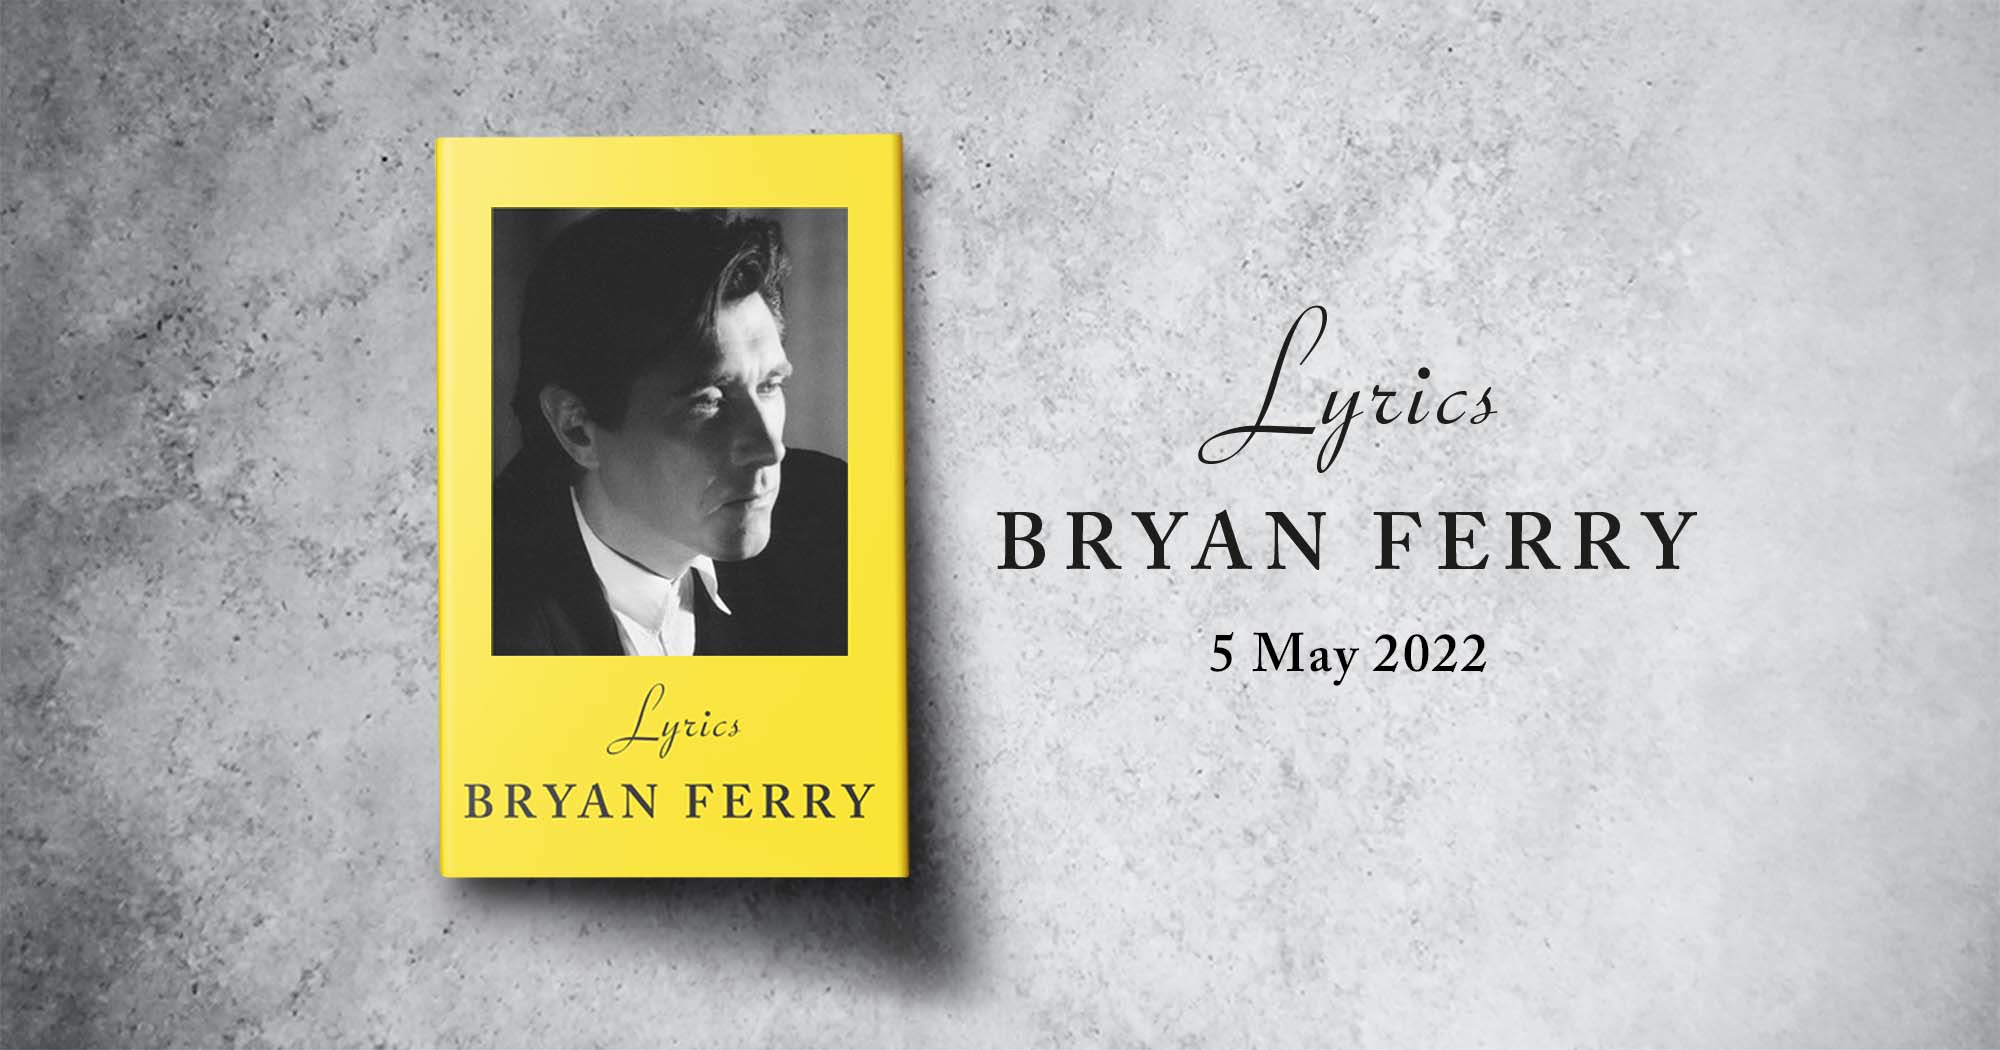 Bryan Ferry 'Lyrics' Book out 5 May 2022